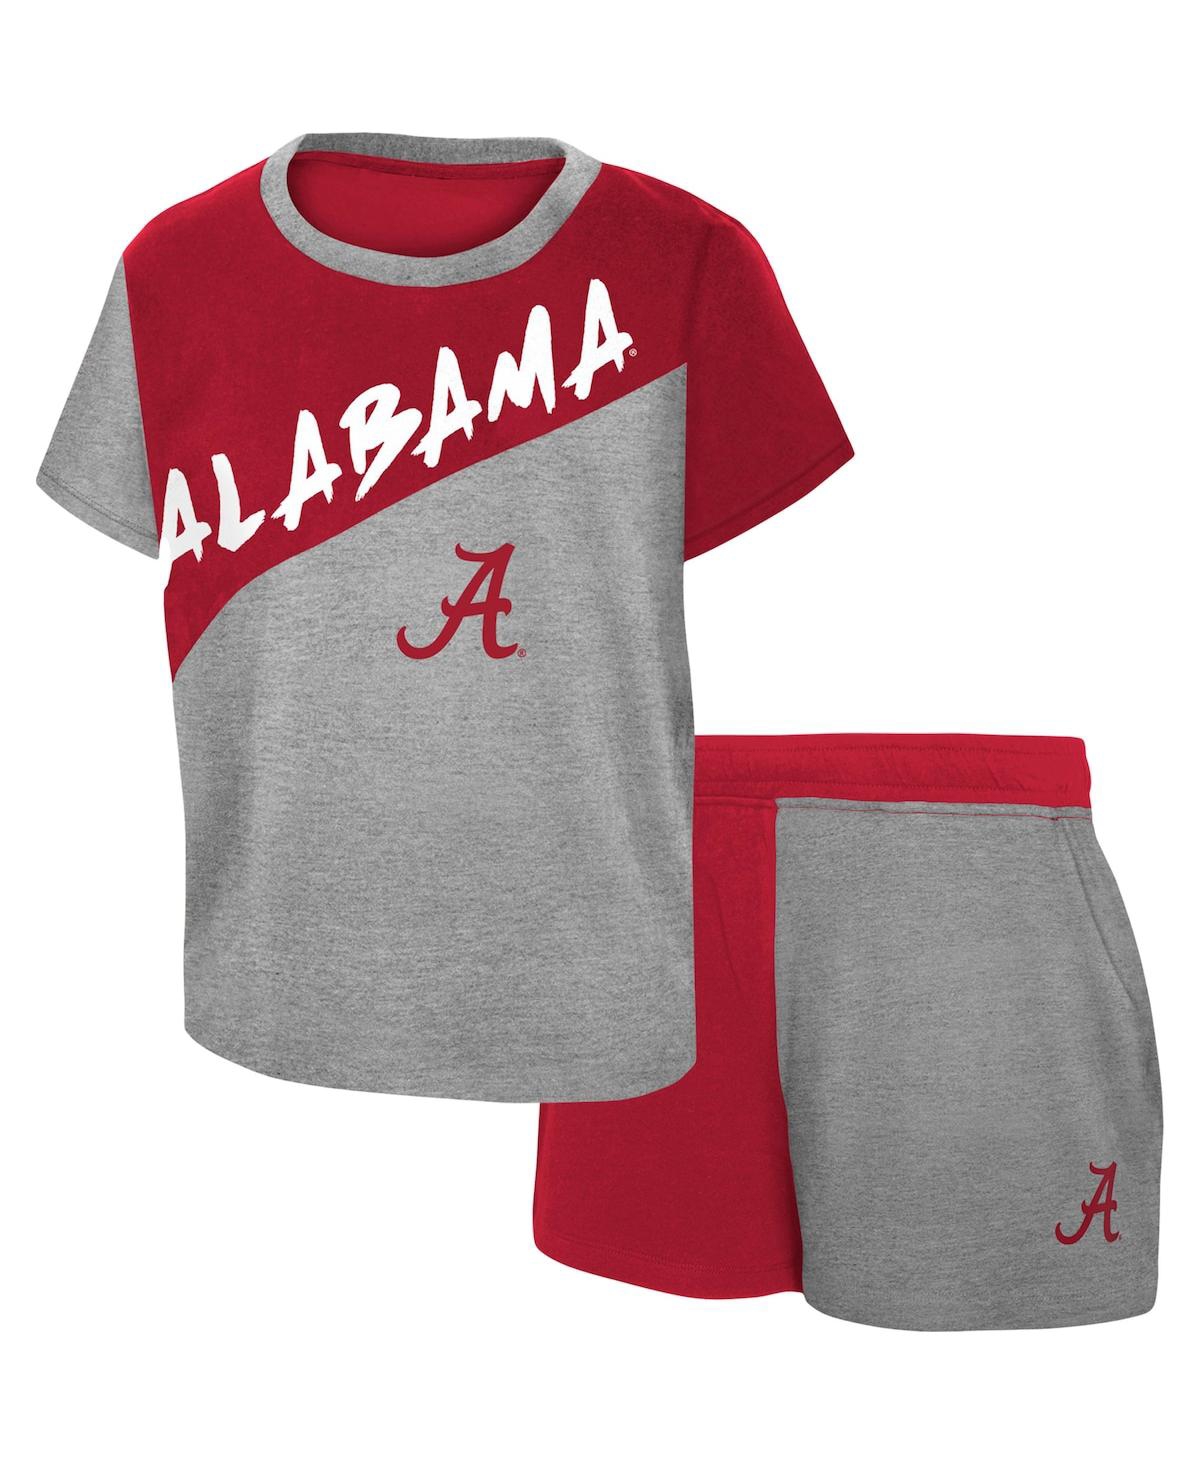 Outerstuff Babies' Toddler Boys Heather Gray Alabama Crimson Tide Super Star T-shirt And Shorts Set